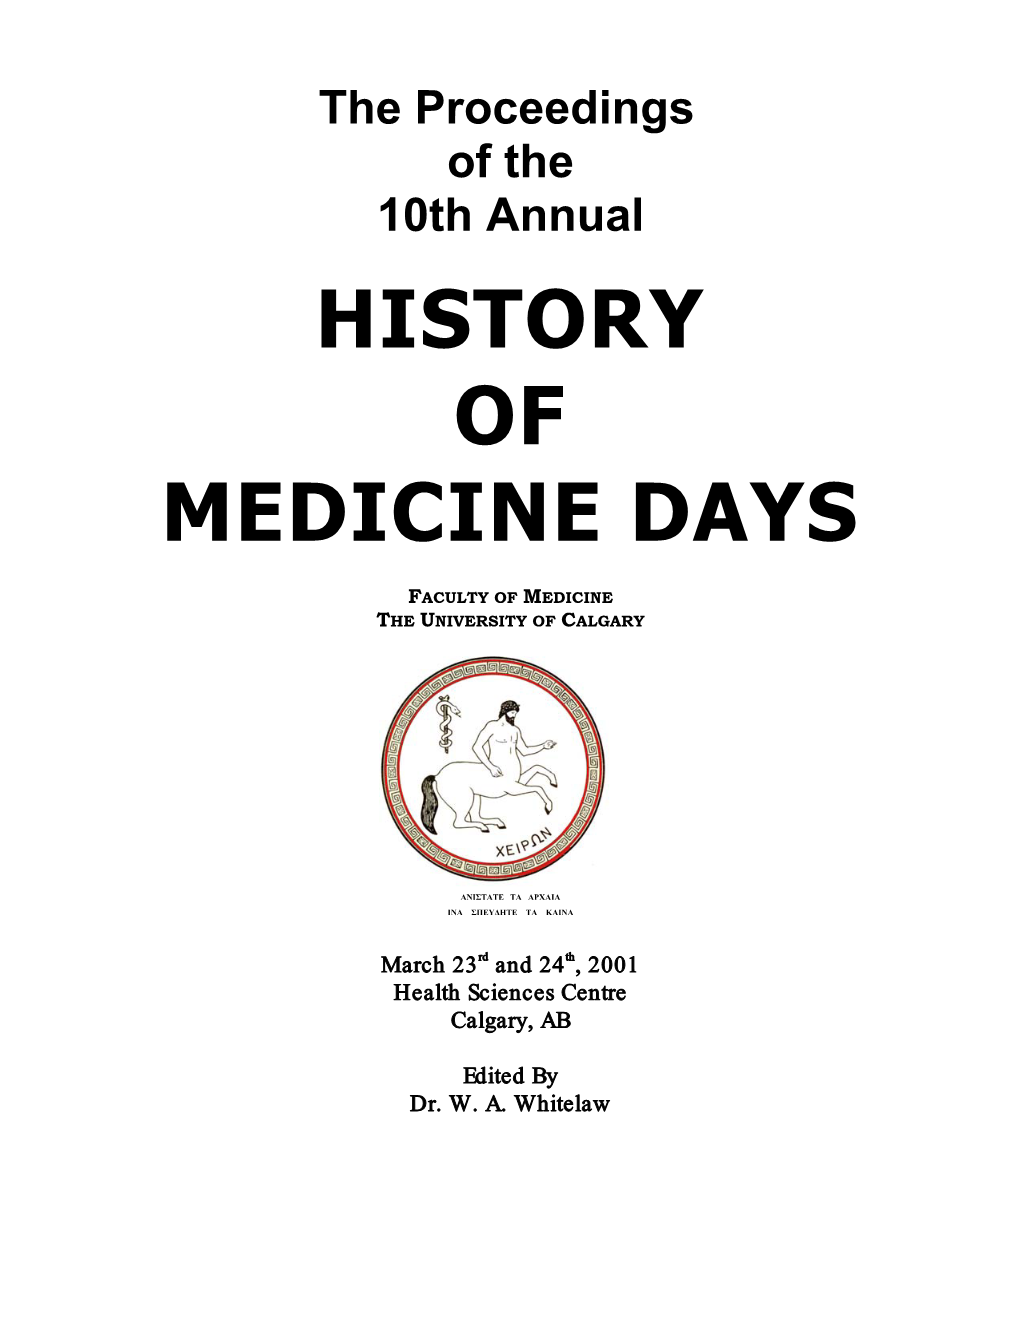 History of Medicine Days